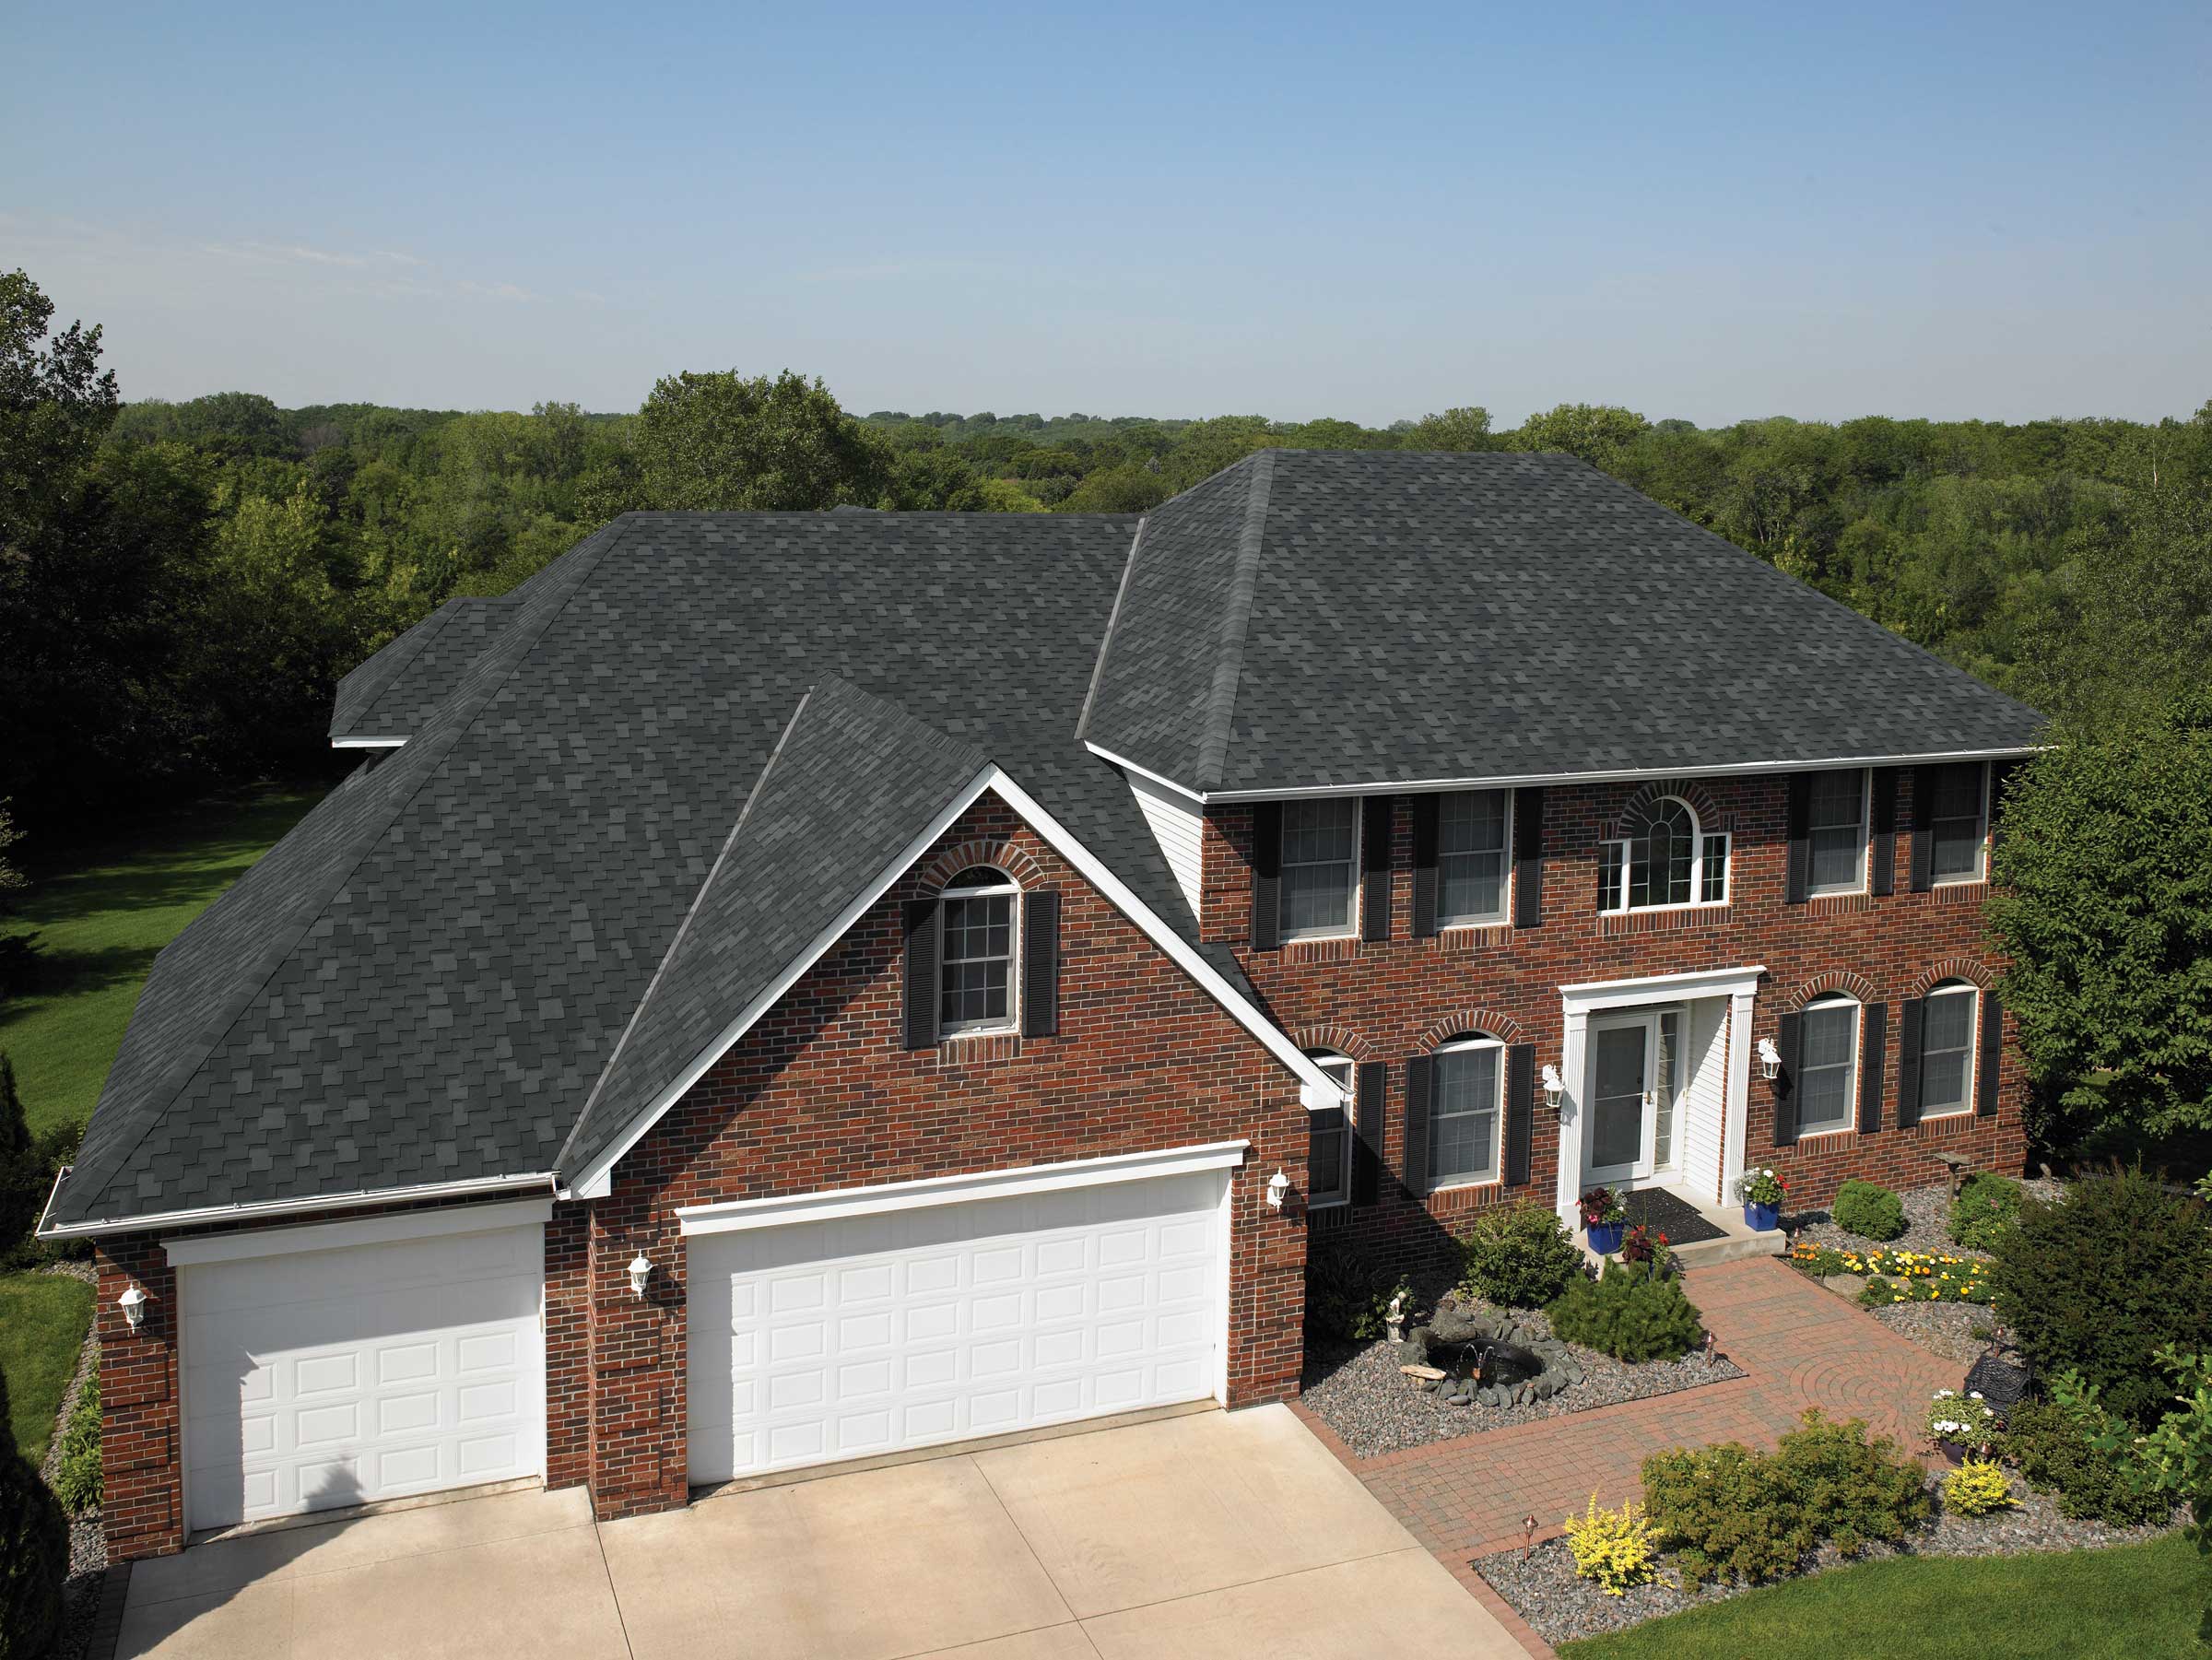 American-shingles-roofing-materials-ULTRA-premium-cladding